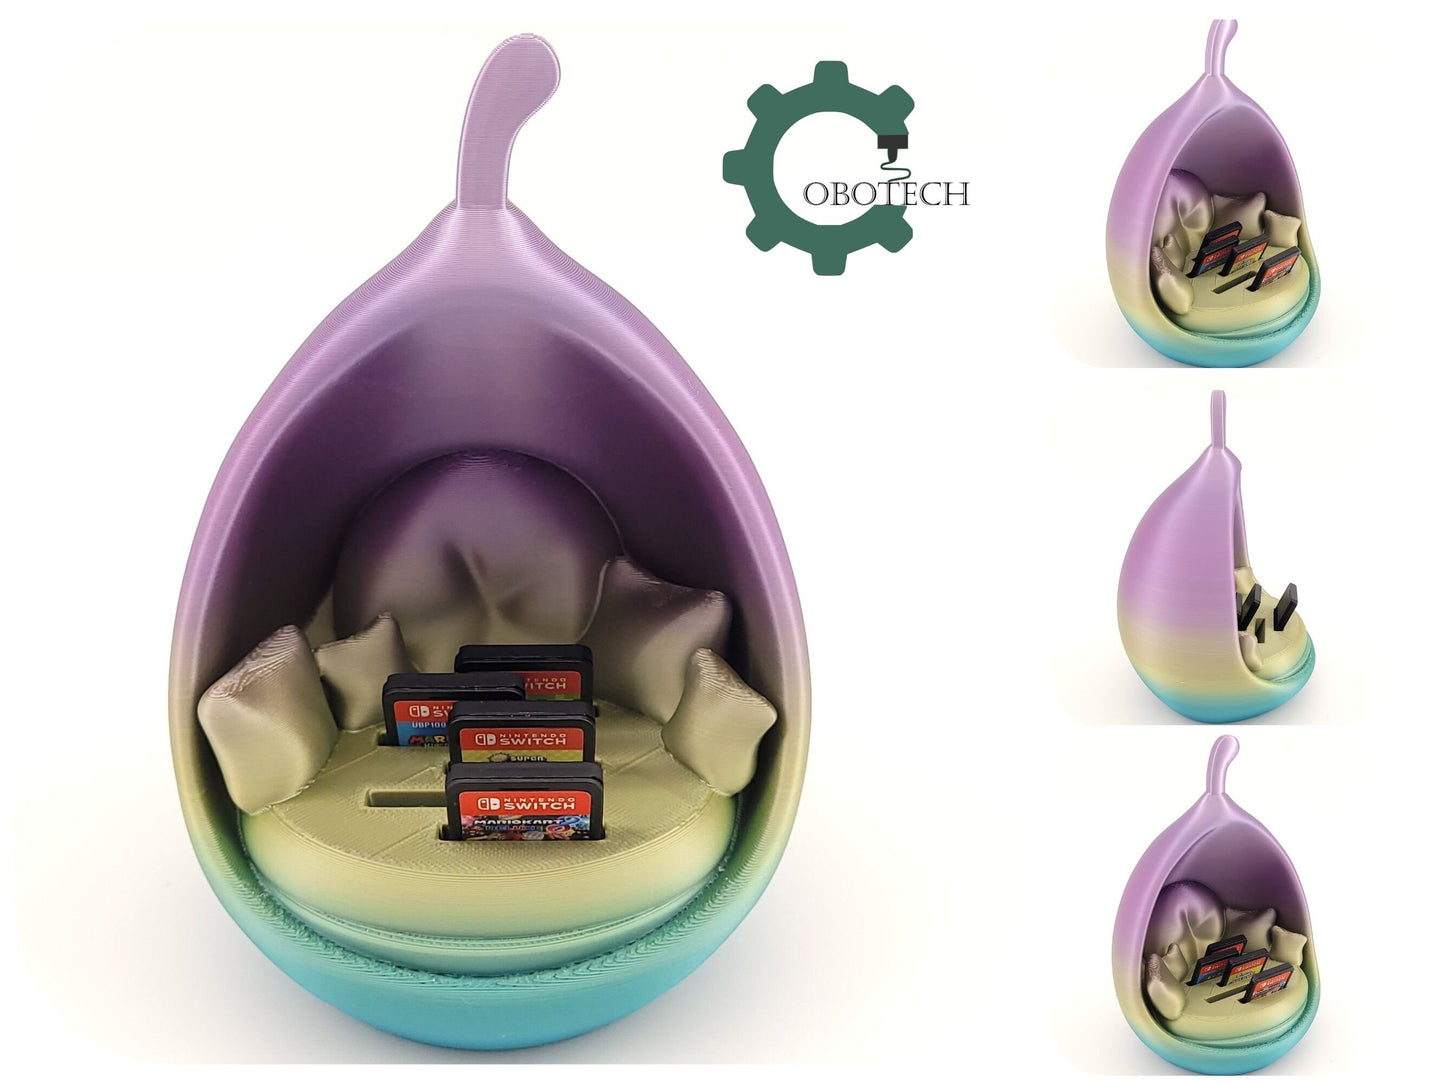 3D Print Nintendo Card Holder Pear Shaped Sofa by Cobotech, Game Card Organizer, Nintendo Card Pear Holder, Desk/Home Decor, Cool Gift